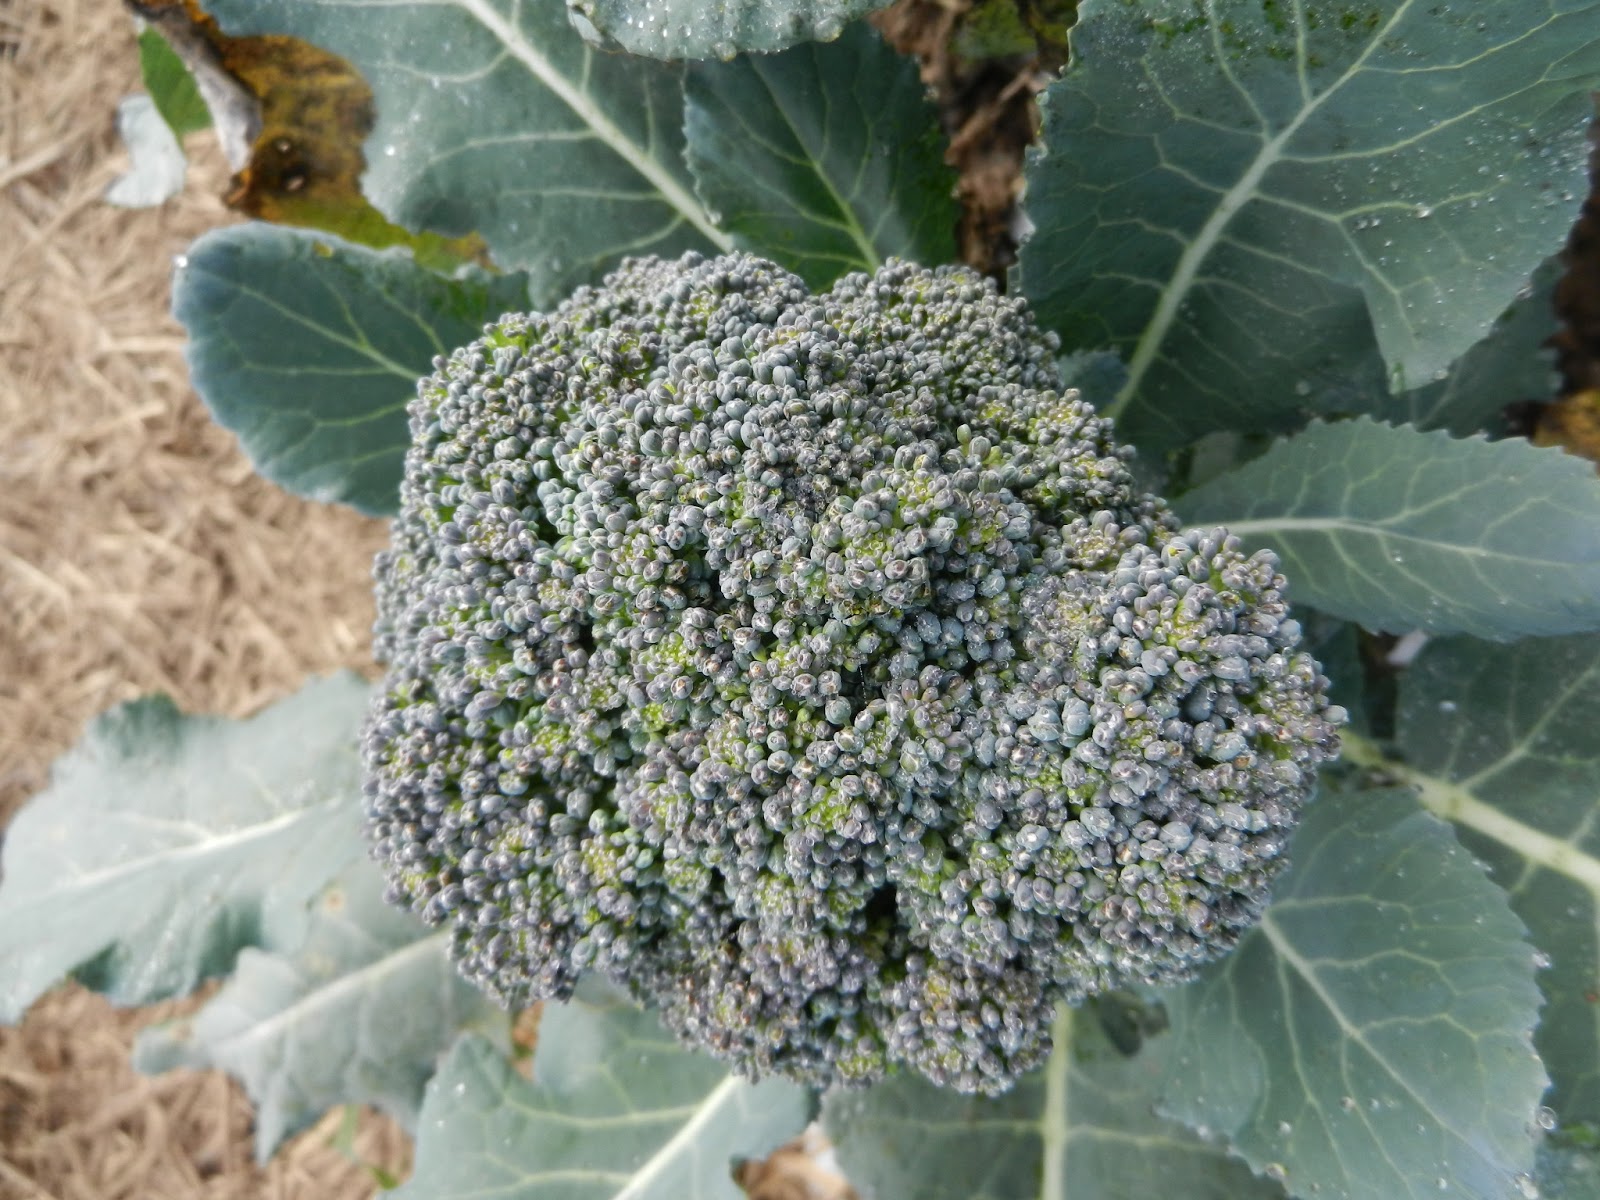 Arcadia broccoli grown in 2012